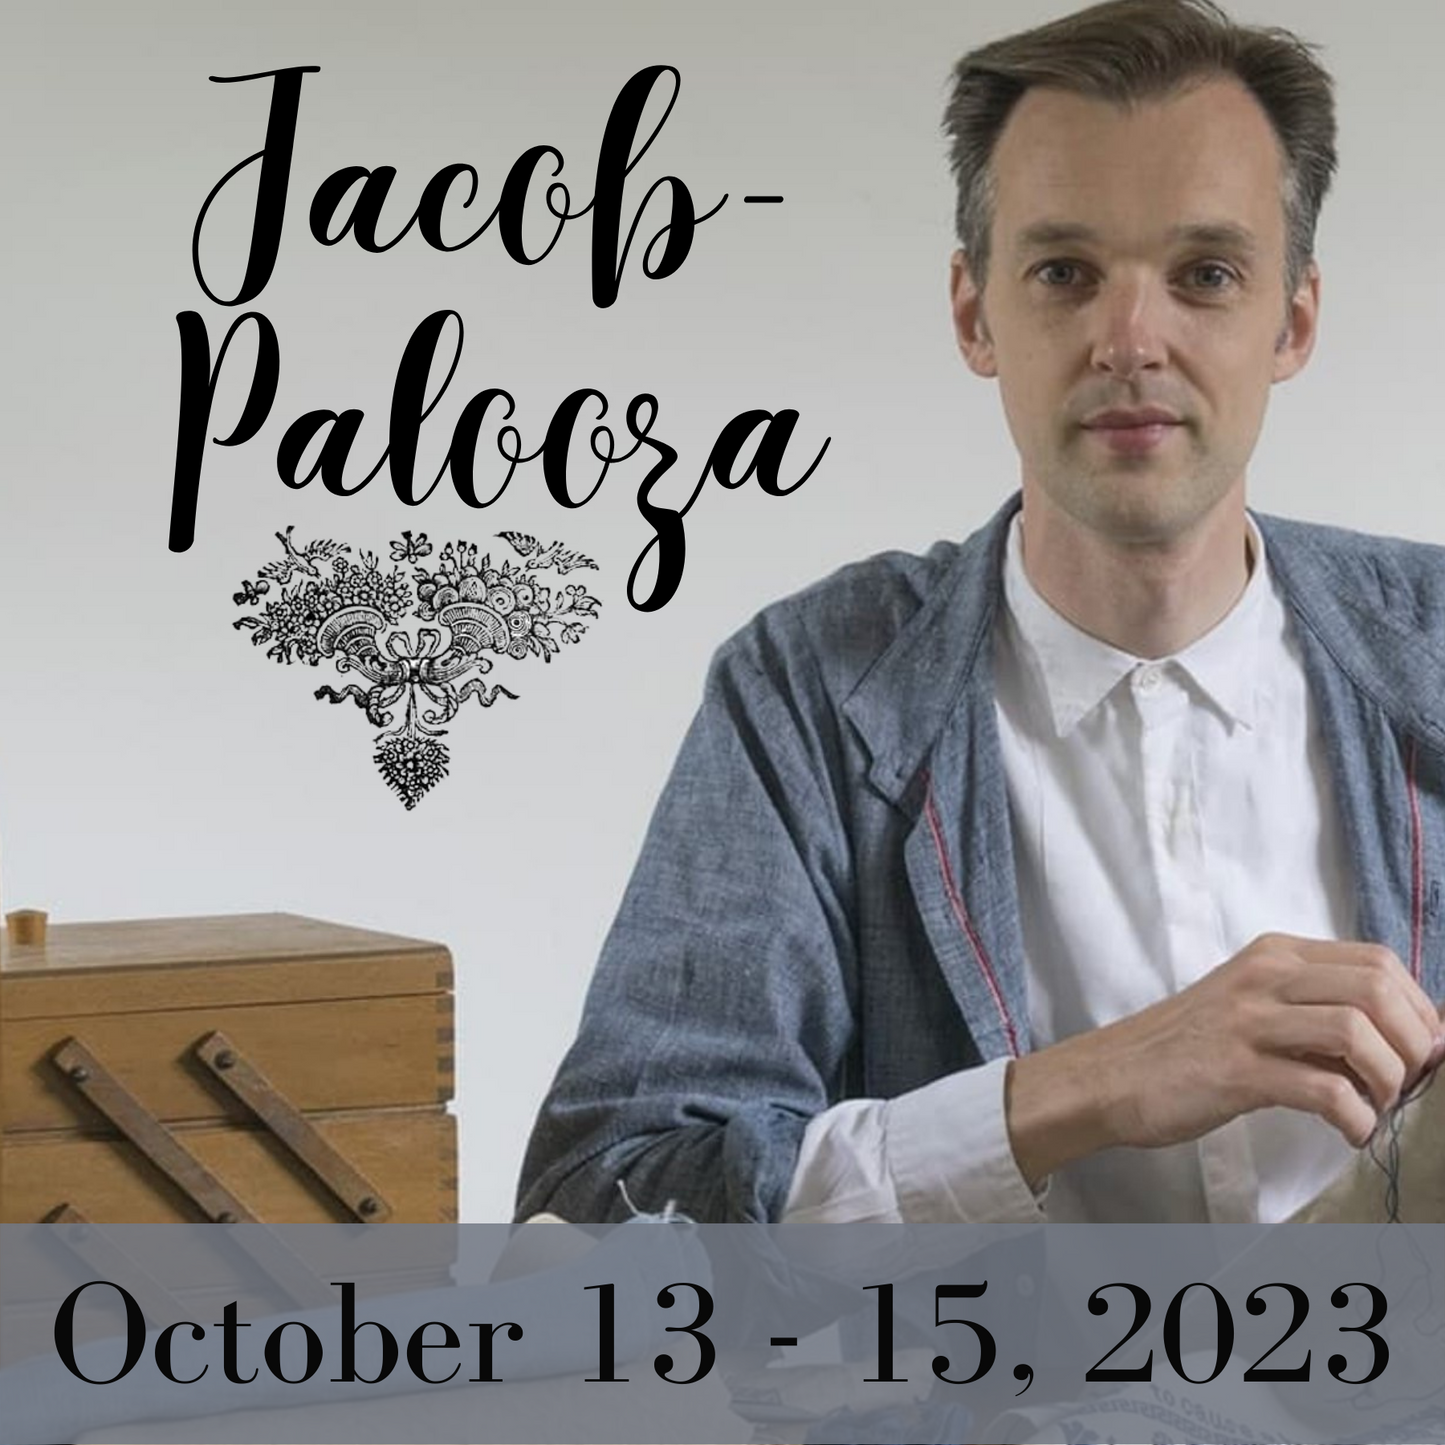 Jacob-Palooza Weekend 2 (October 13, 2023 - October 15, 2023)